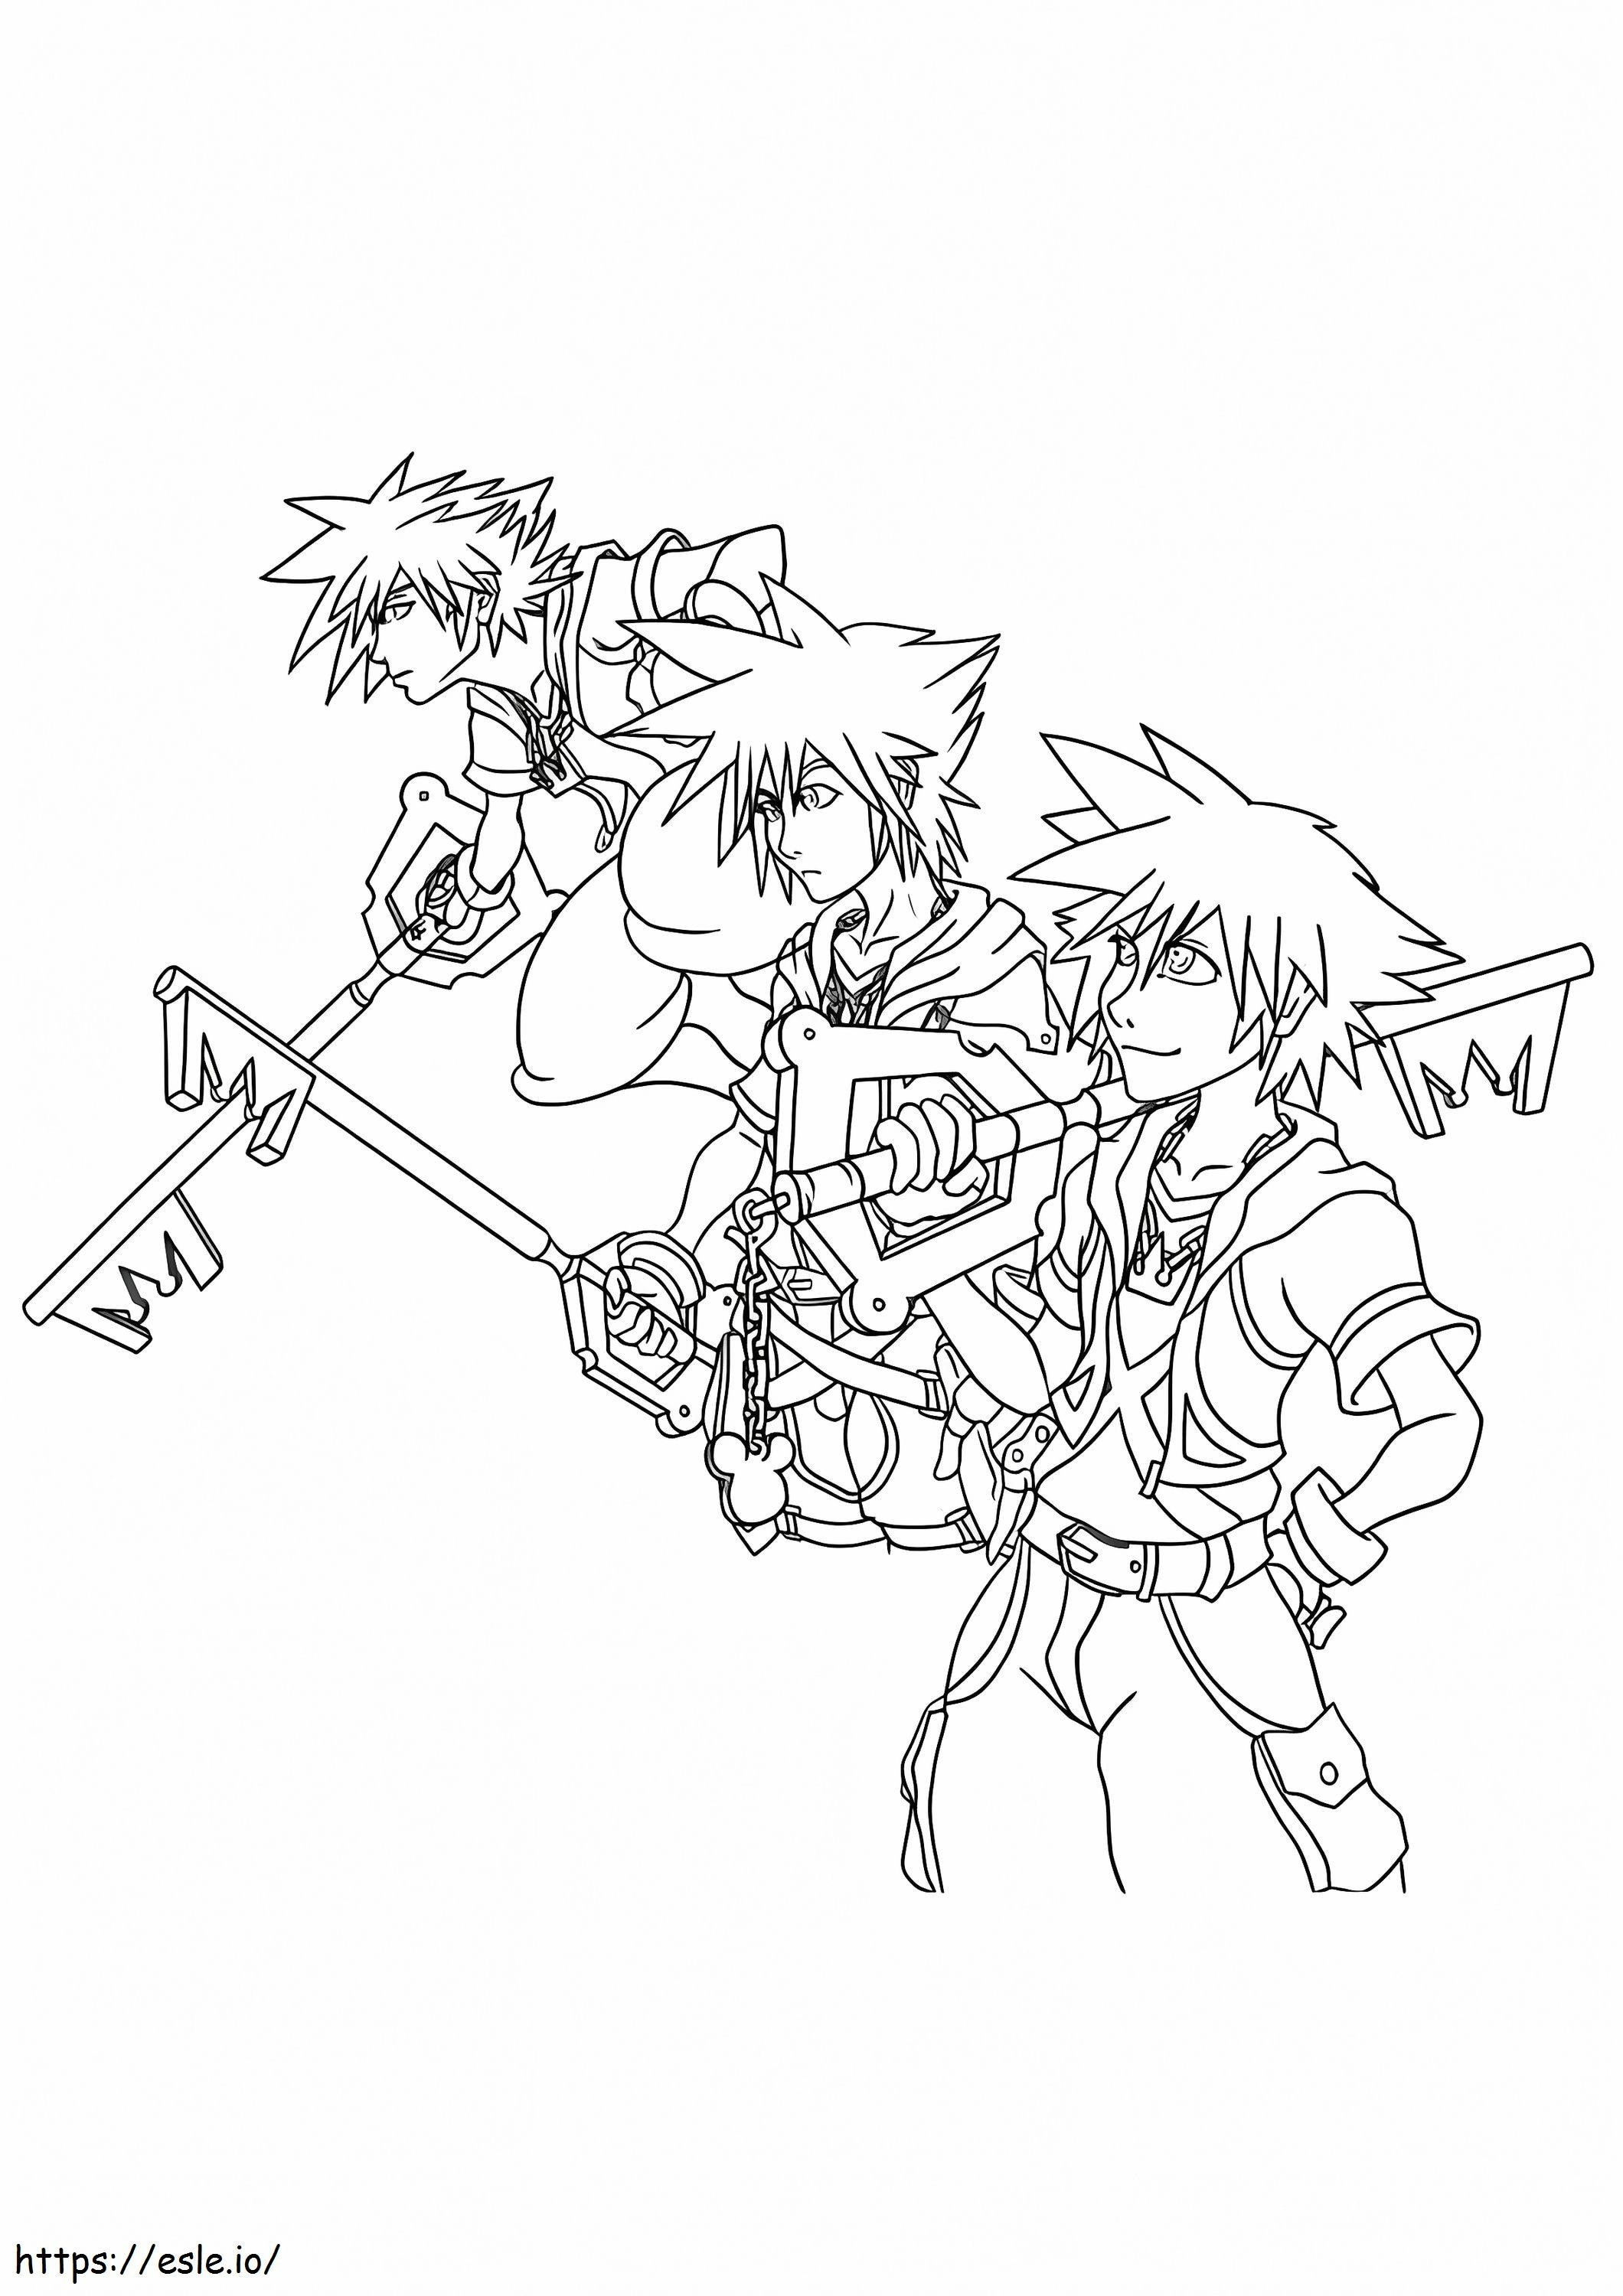 Coloriage Sora dans Kingdom Hearts à imprimer dessin